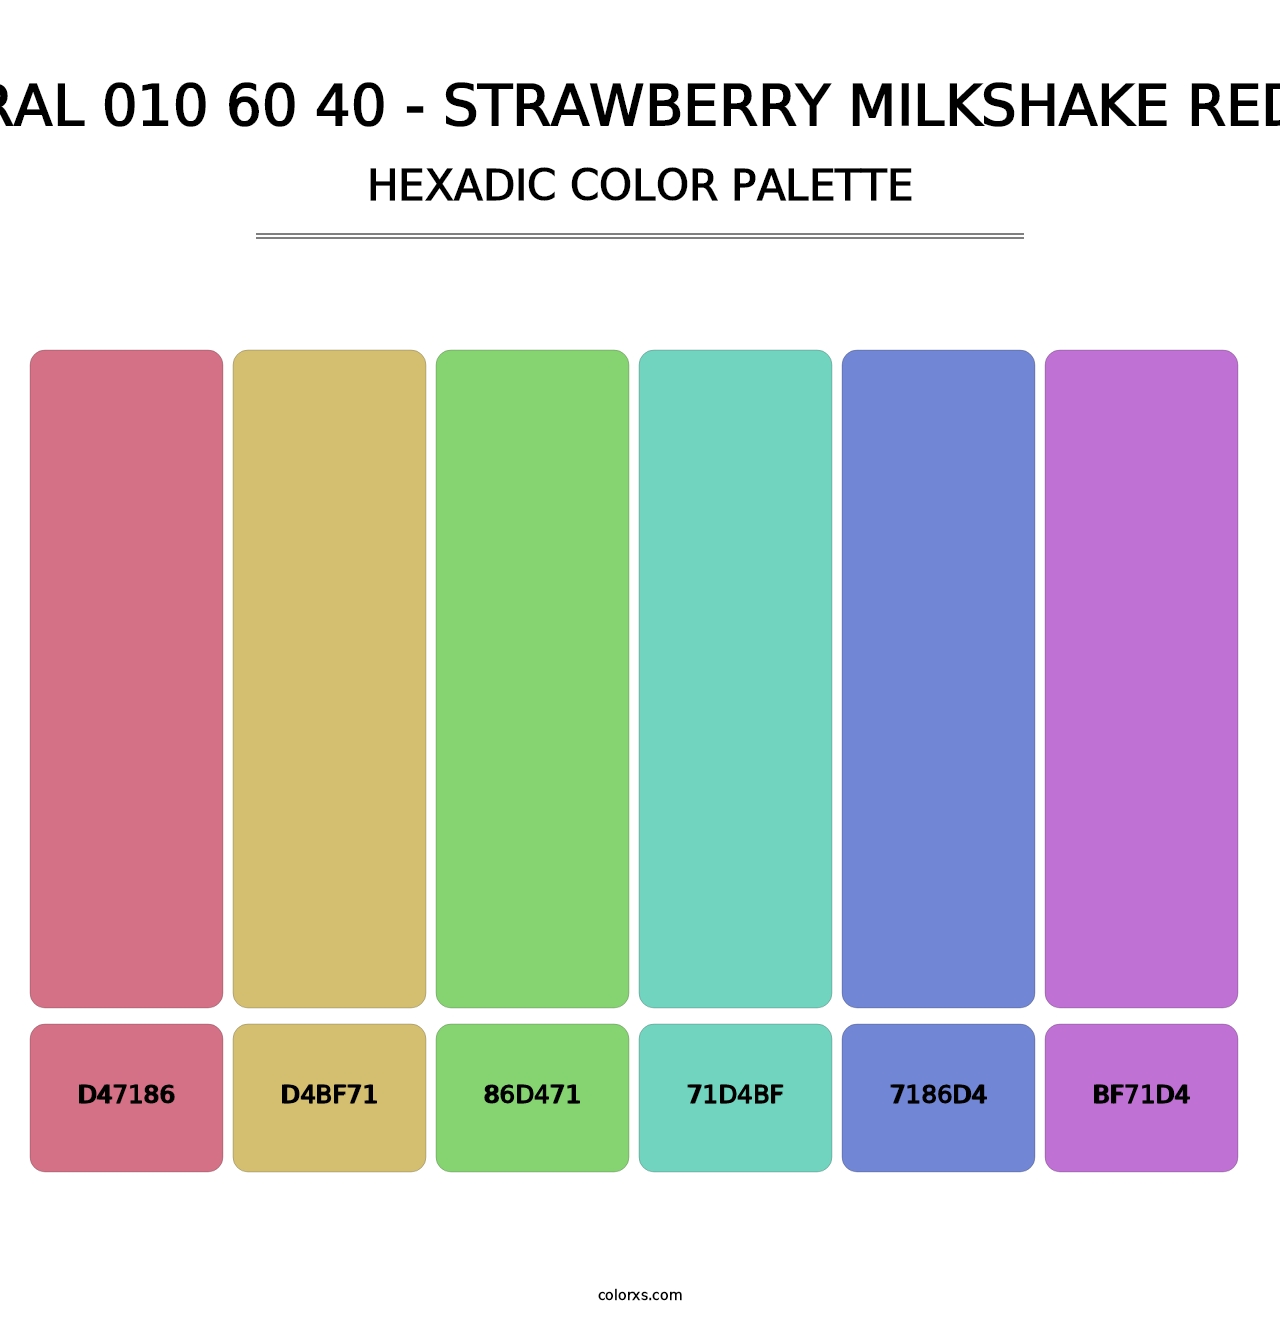 RAL 010 60 40 - Strawberry Milkshake Red - Hexadic Color Palette